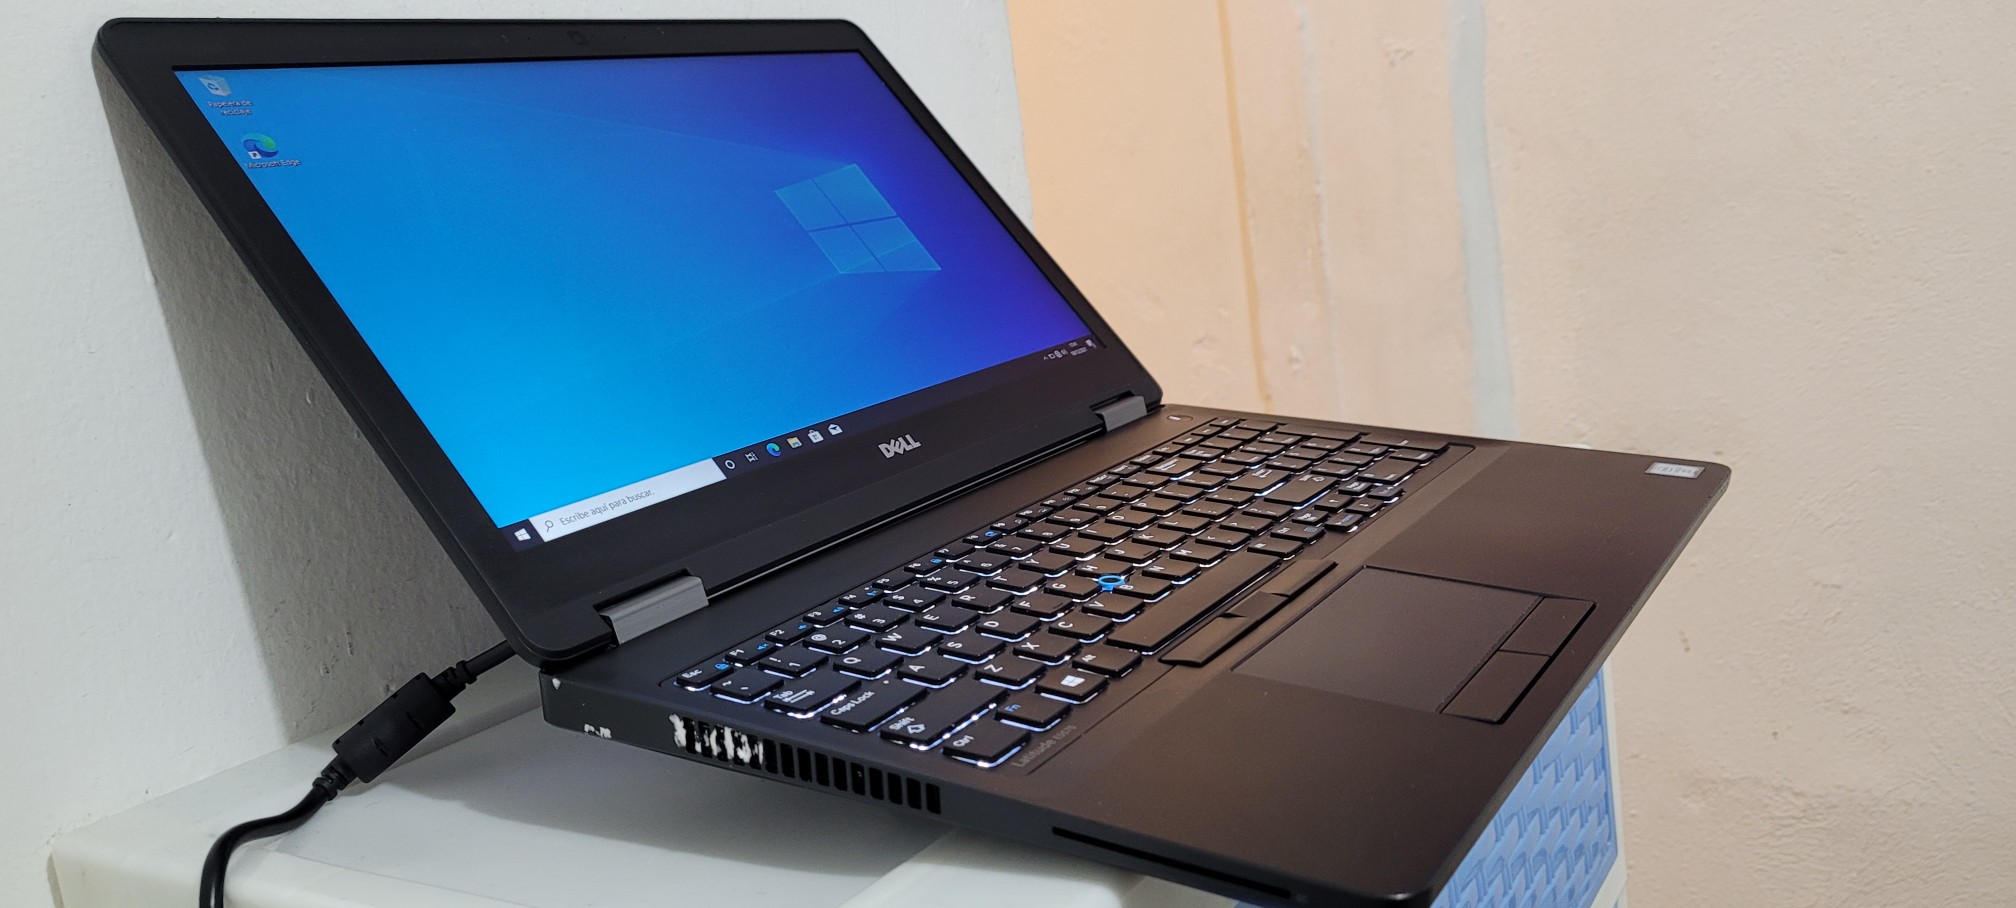 computadoras y laptops - Dell 5550 17 Pulg Core i7 Ram 8gb Disco 1TB Full hdmi 1